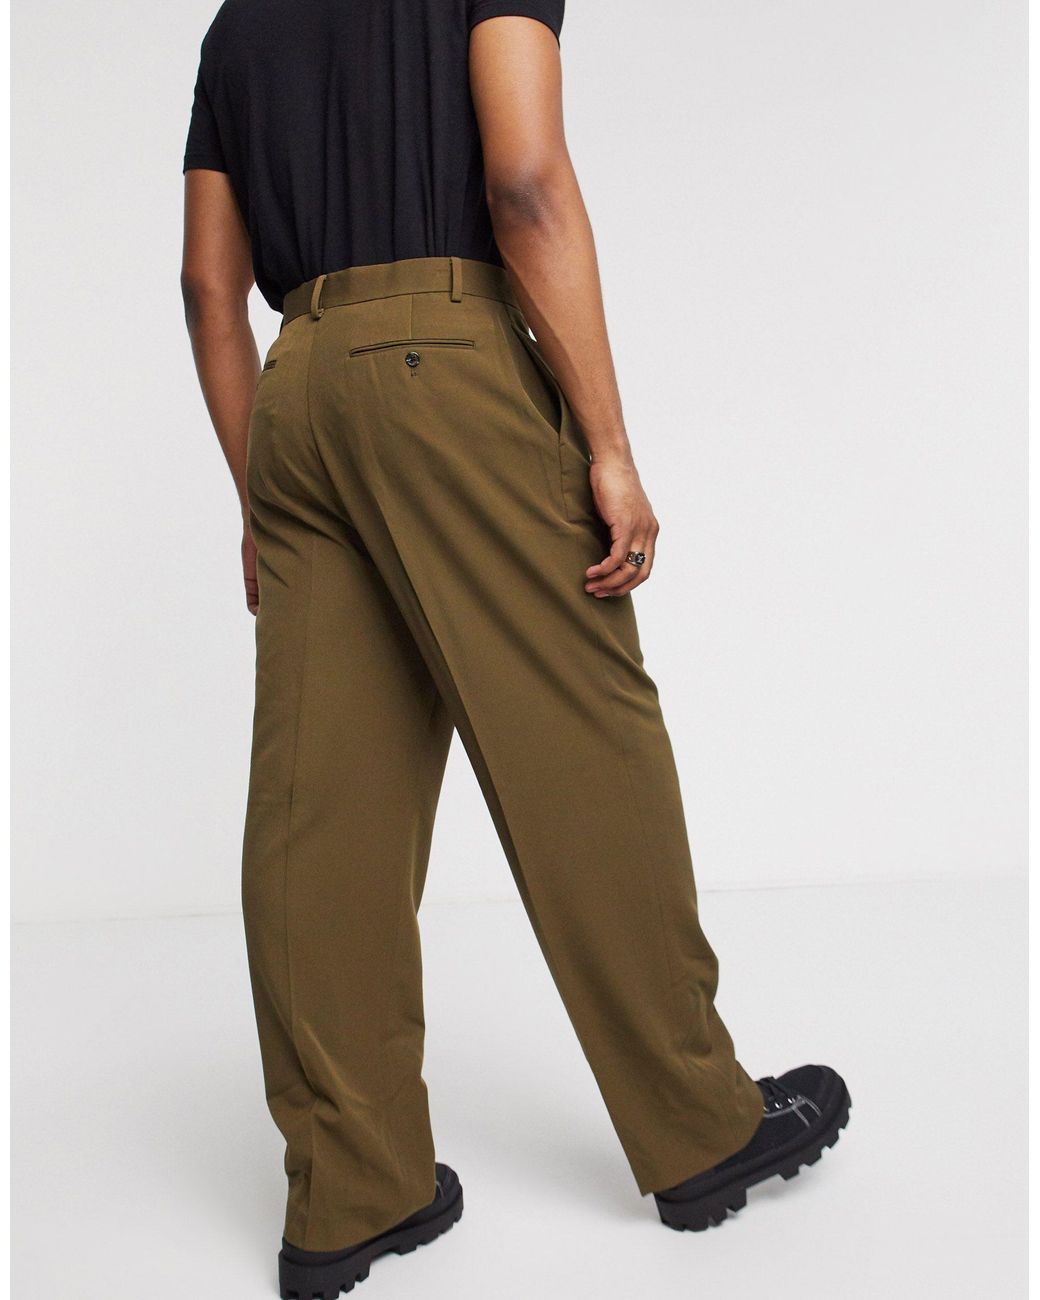 ASOS Smart High Waisted Pants for Men